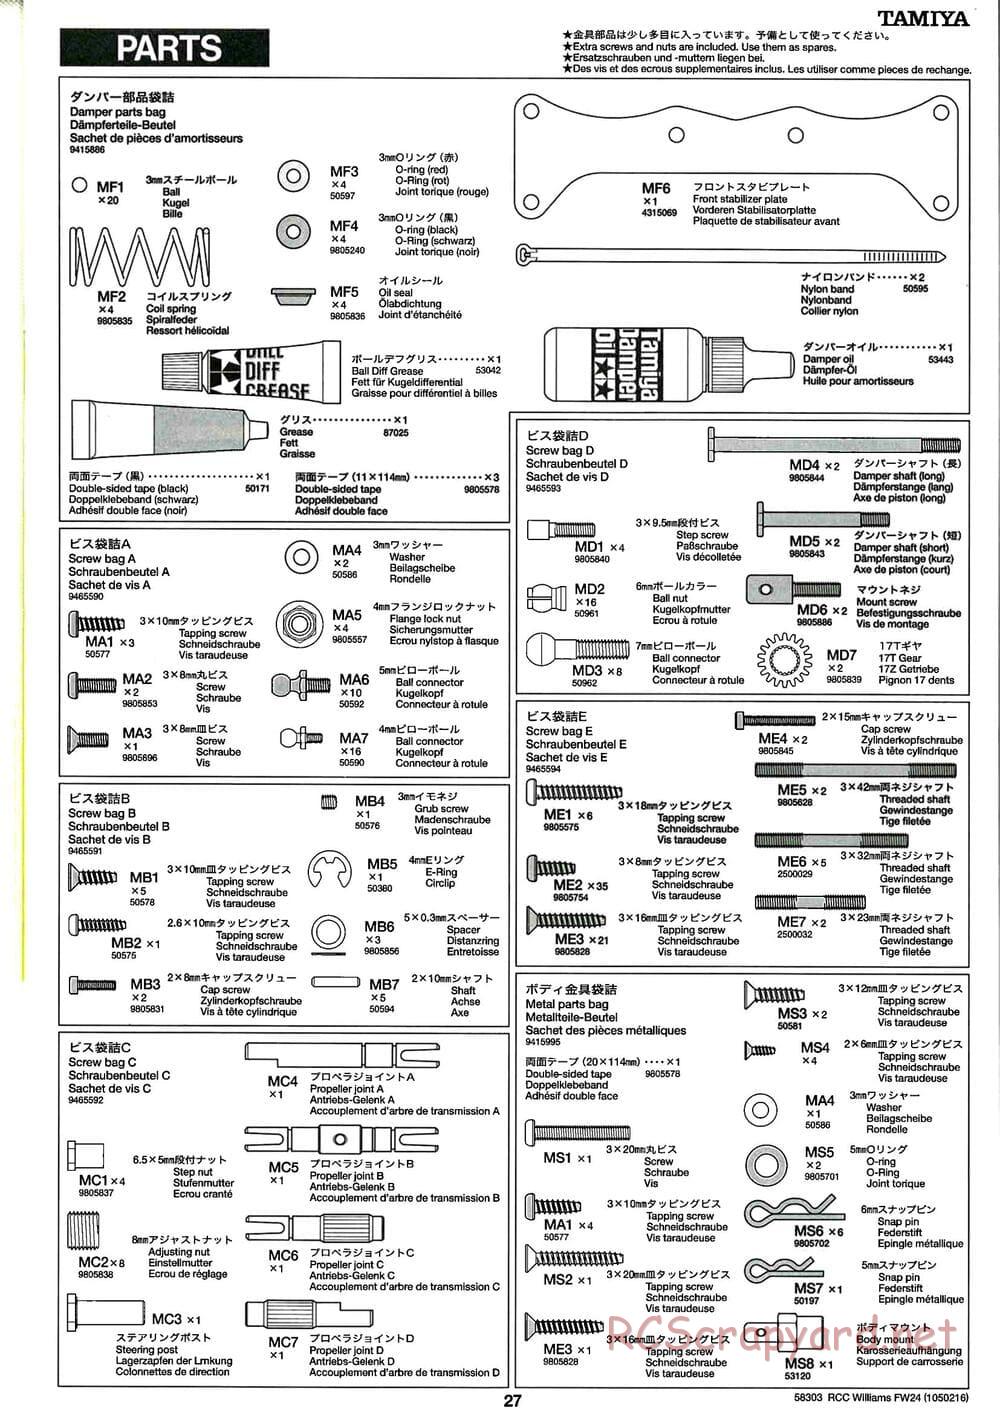 Tamiya - Williams F1 BMW FW24 - F201 Chassis - Manual - Page 27